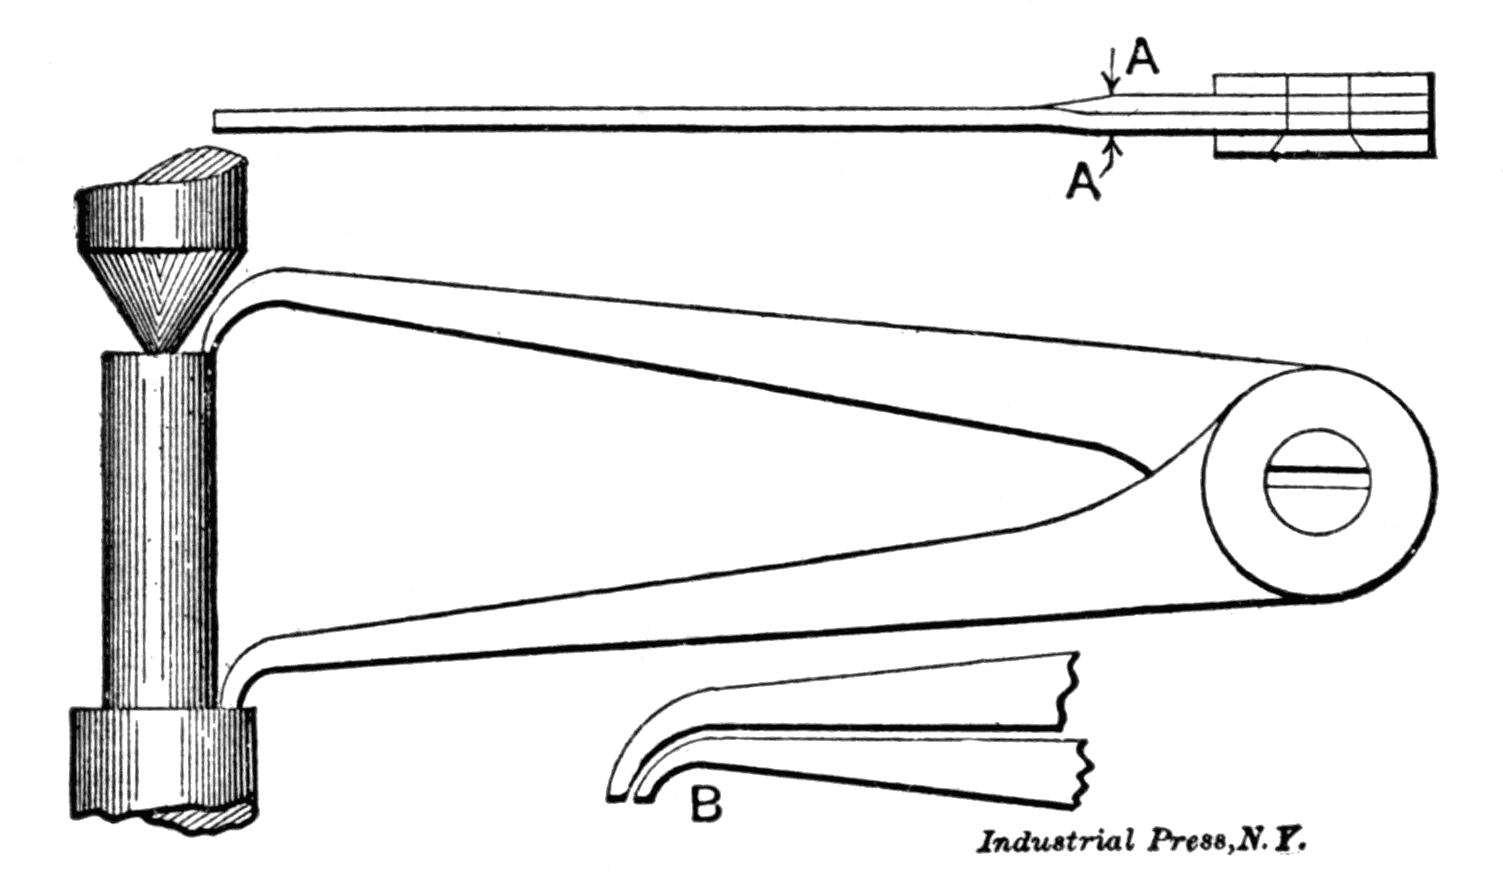 Fig. 5. Shoulder Calipers